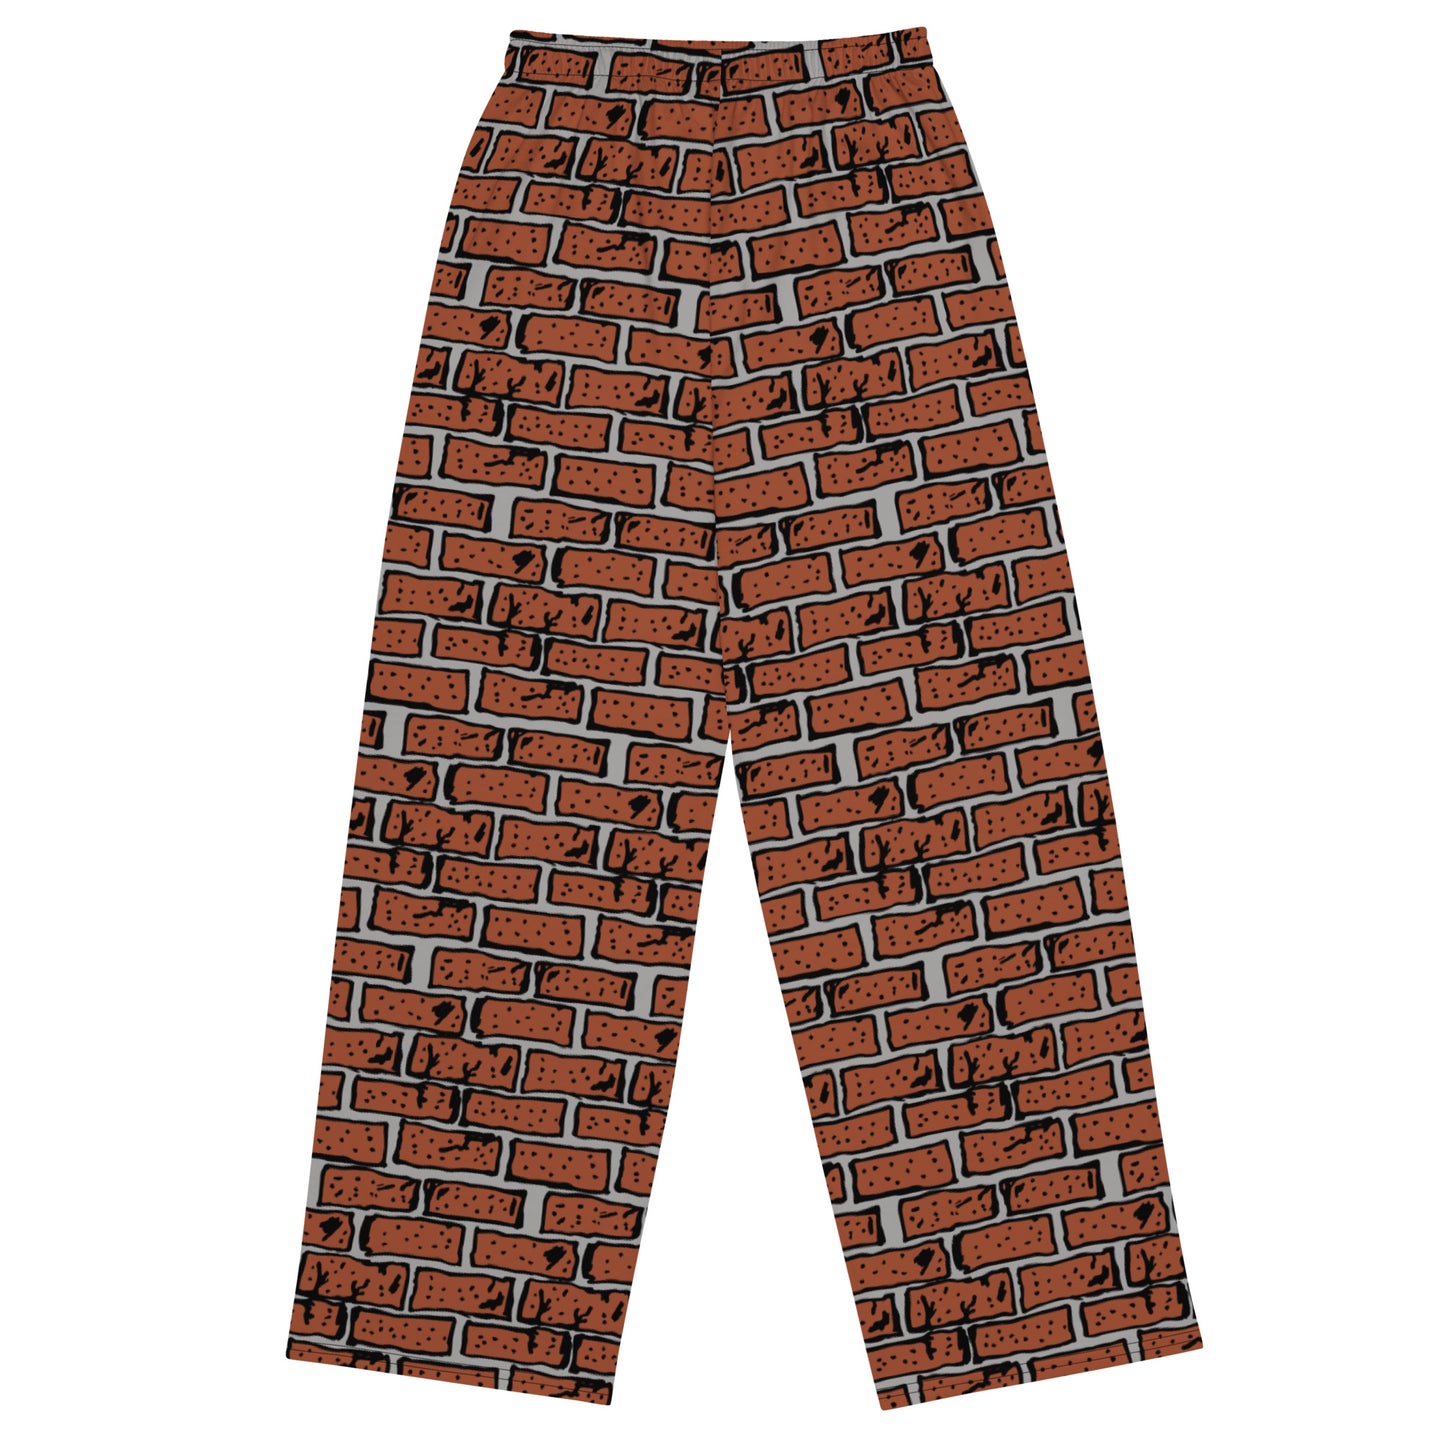 'Brick Wall' All-over print unisex wide-leg loose pajama pants